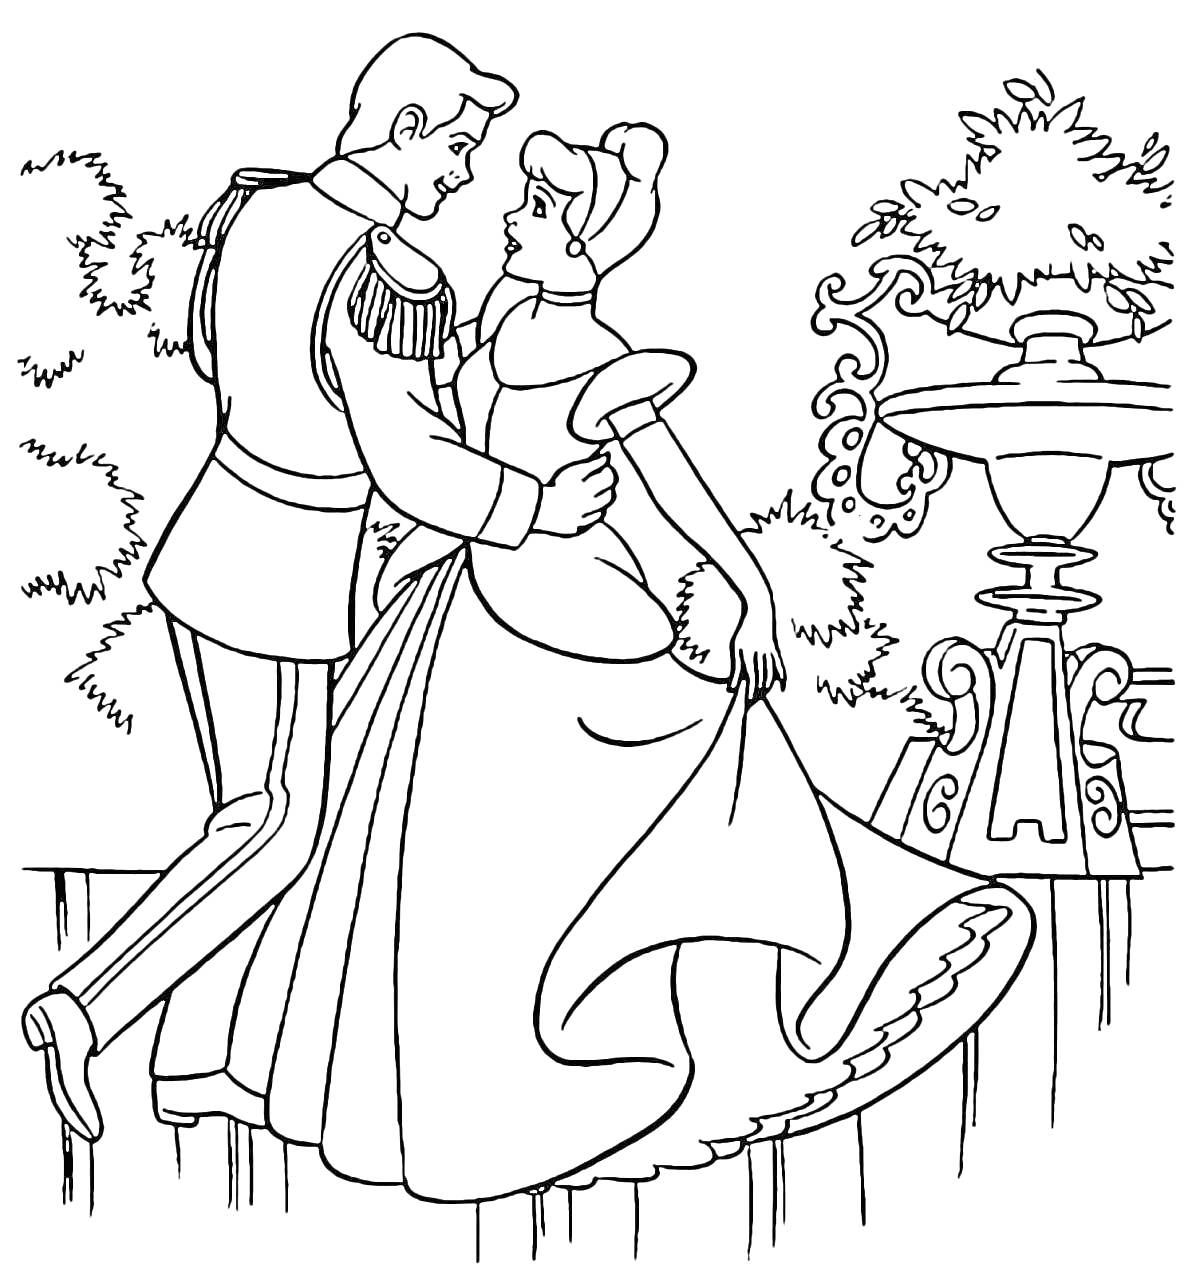 Раскраска Золушка и Принц на балконе с фонтаном на заднем плане